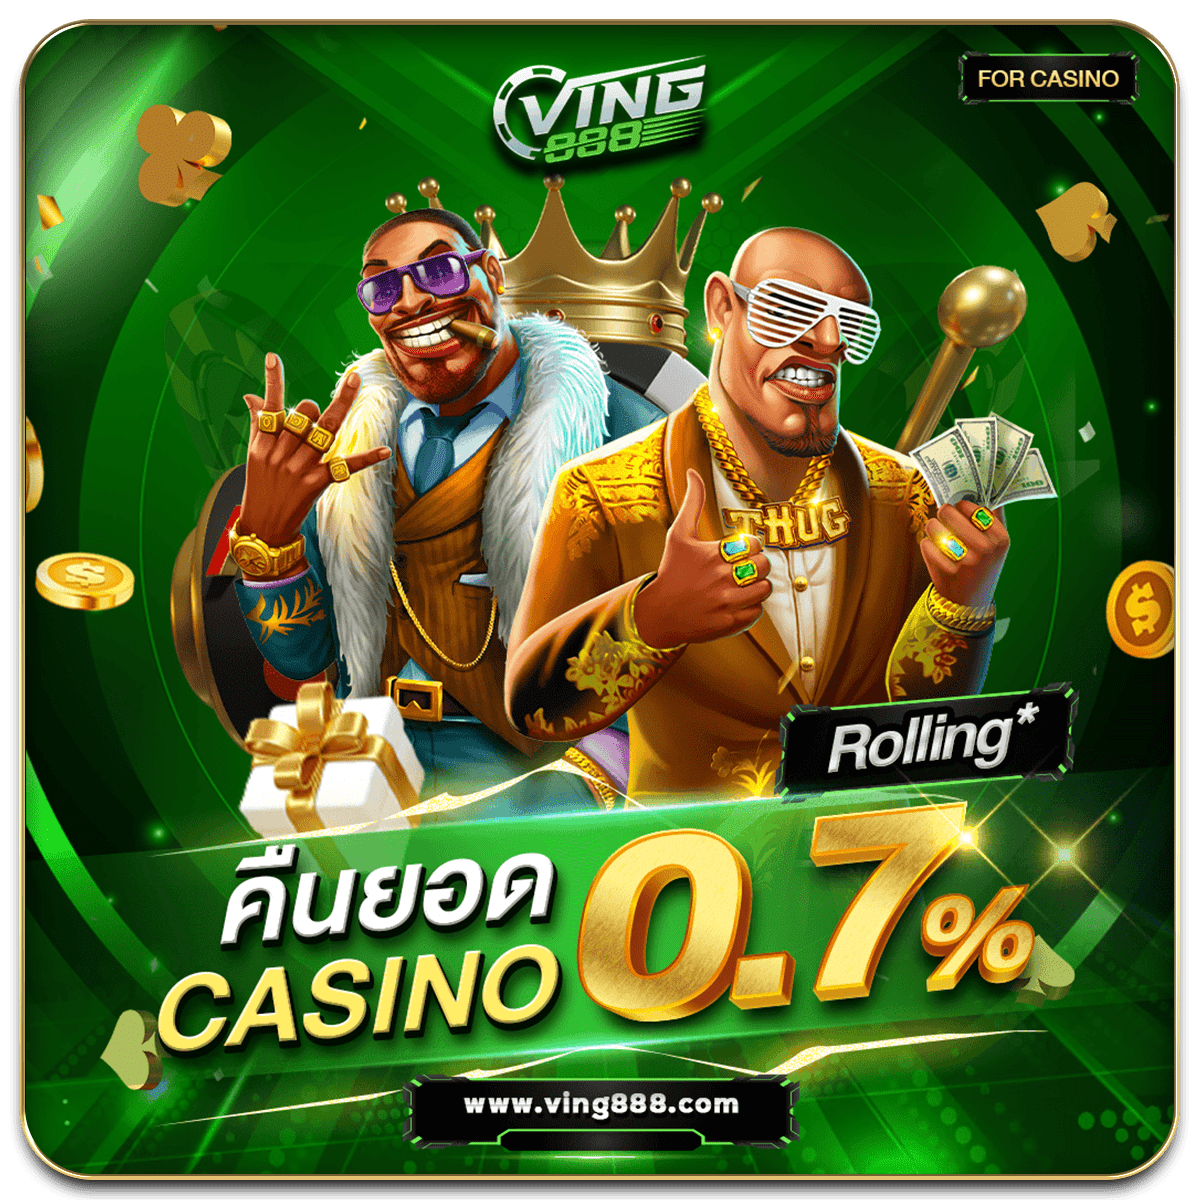 Promotion-Line-OA-Rolling-casino-1040